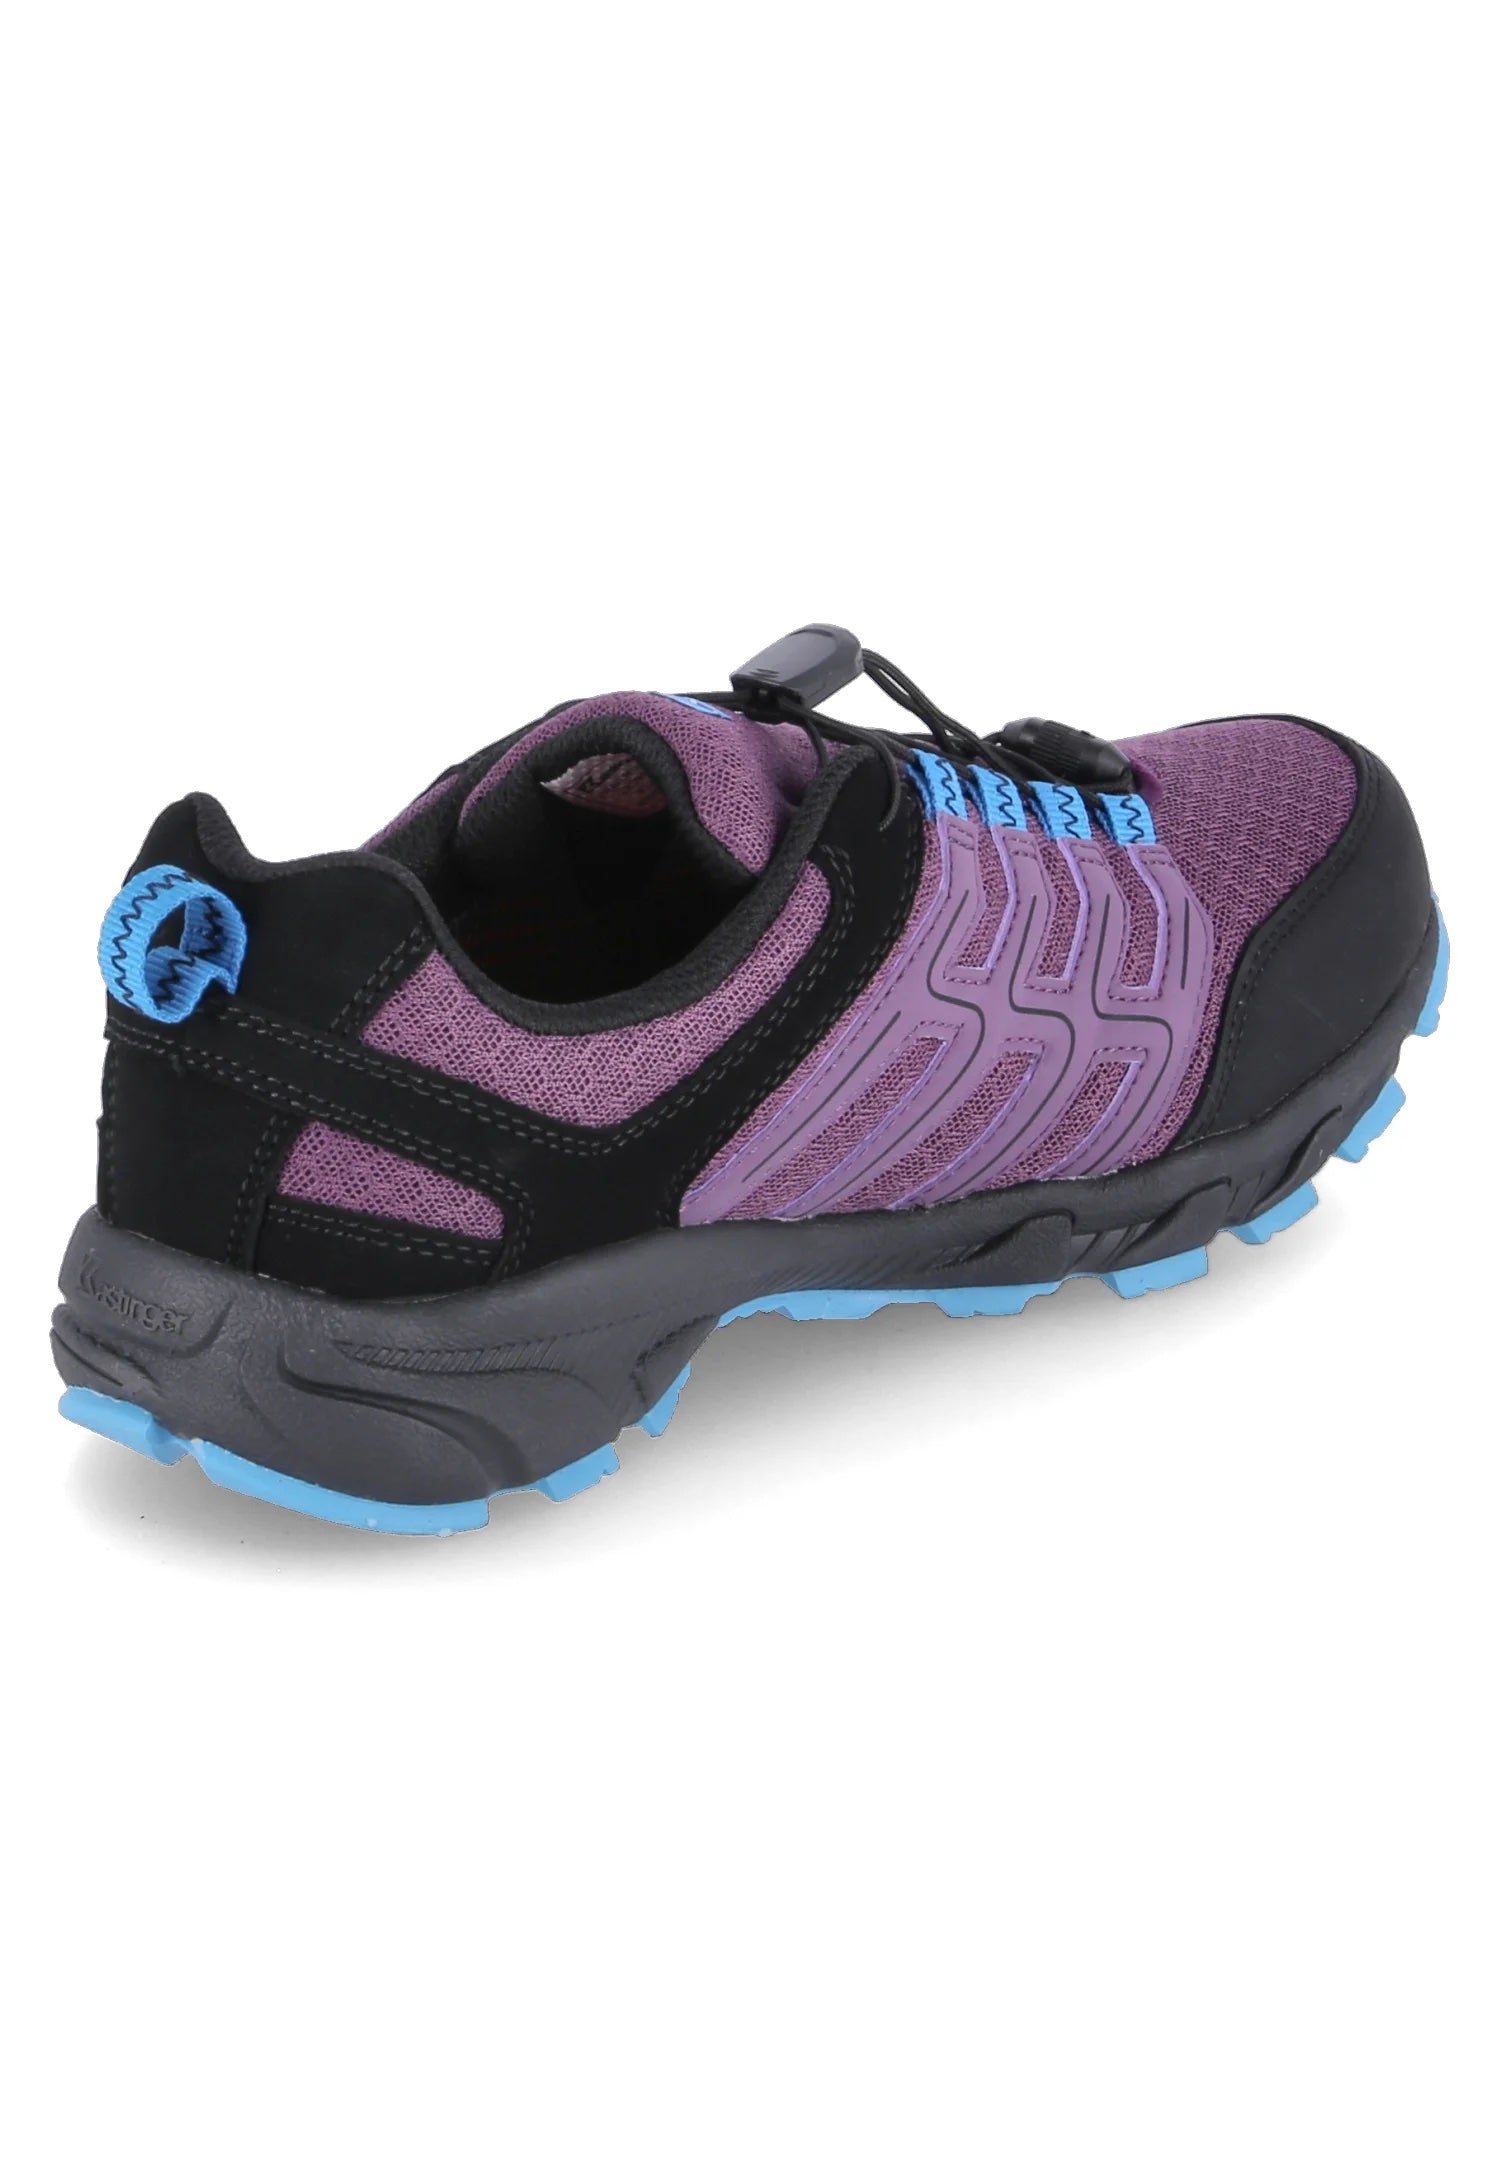 Kastinger Damen Trailrunning Schuh purple 22350